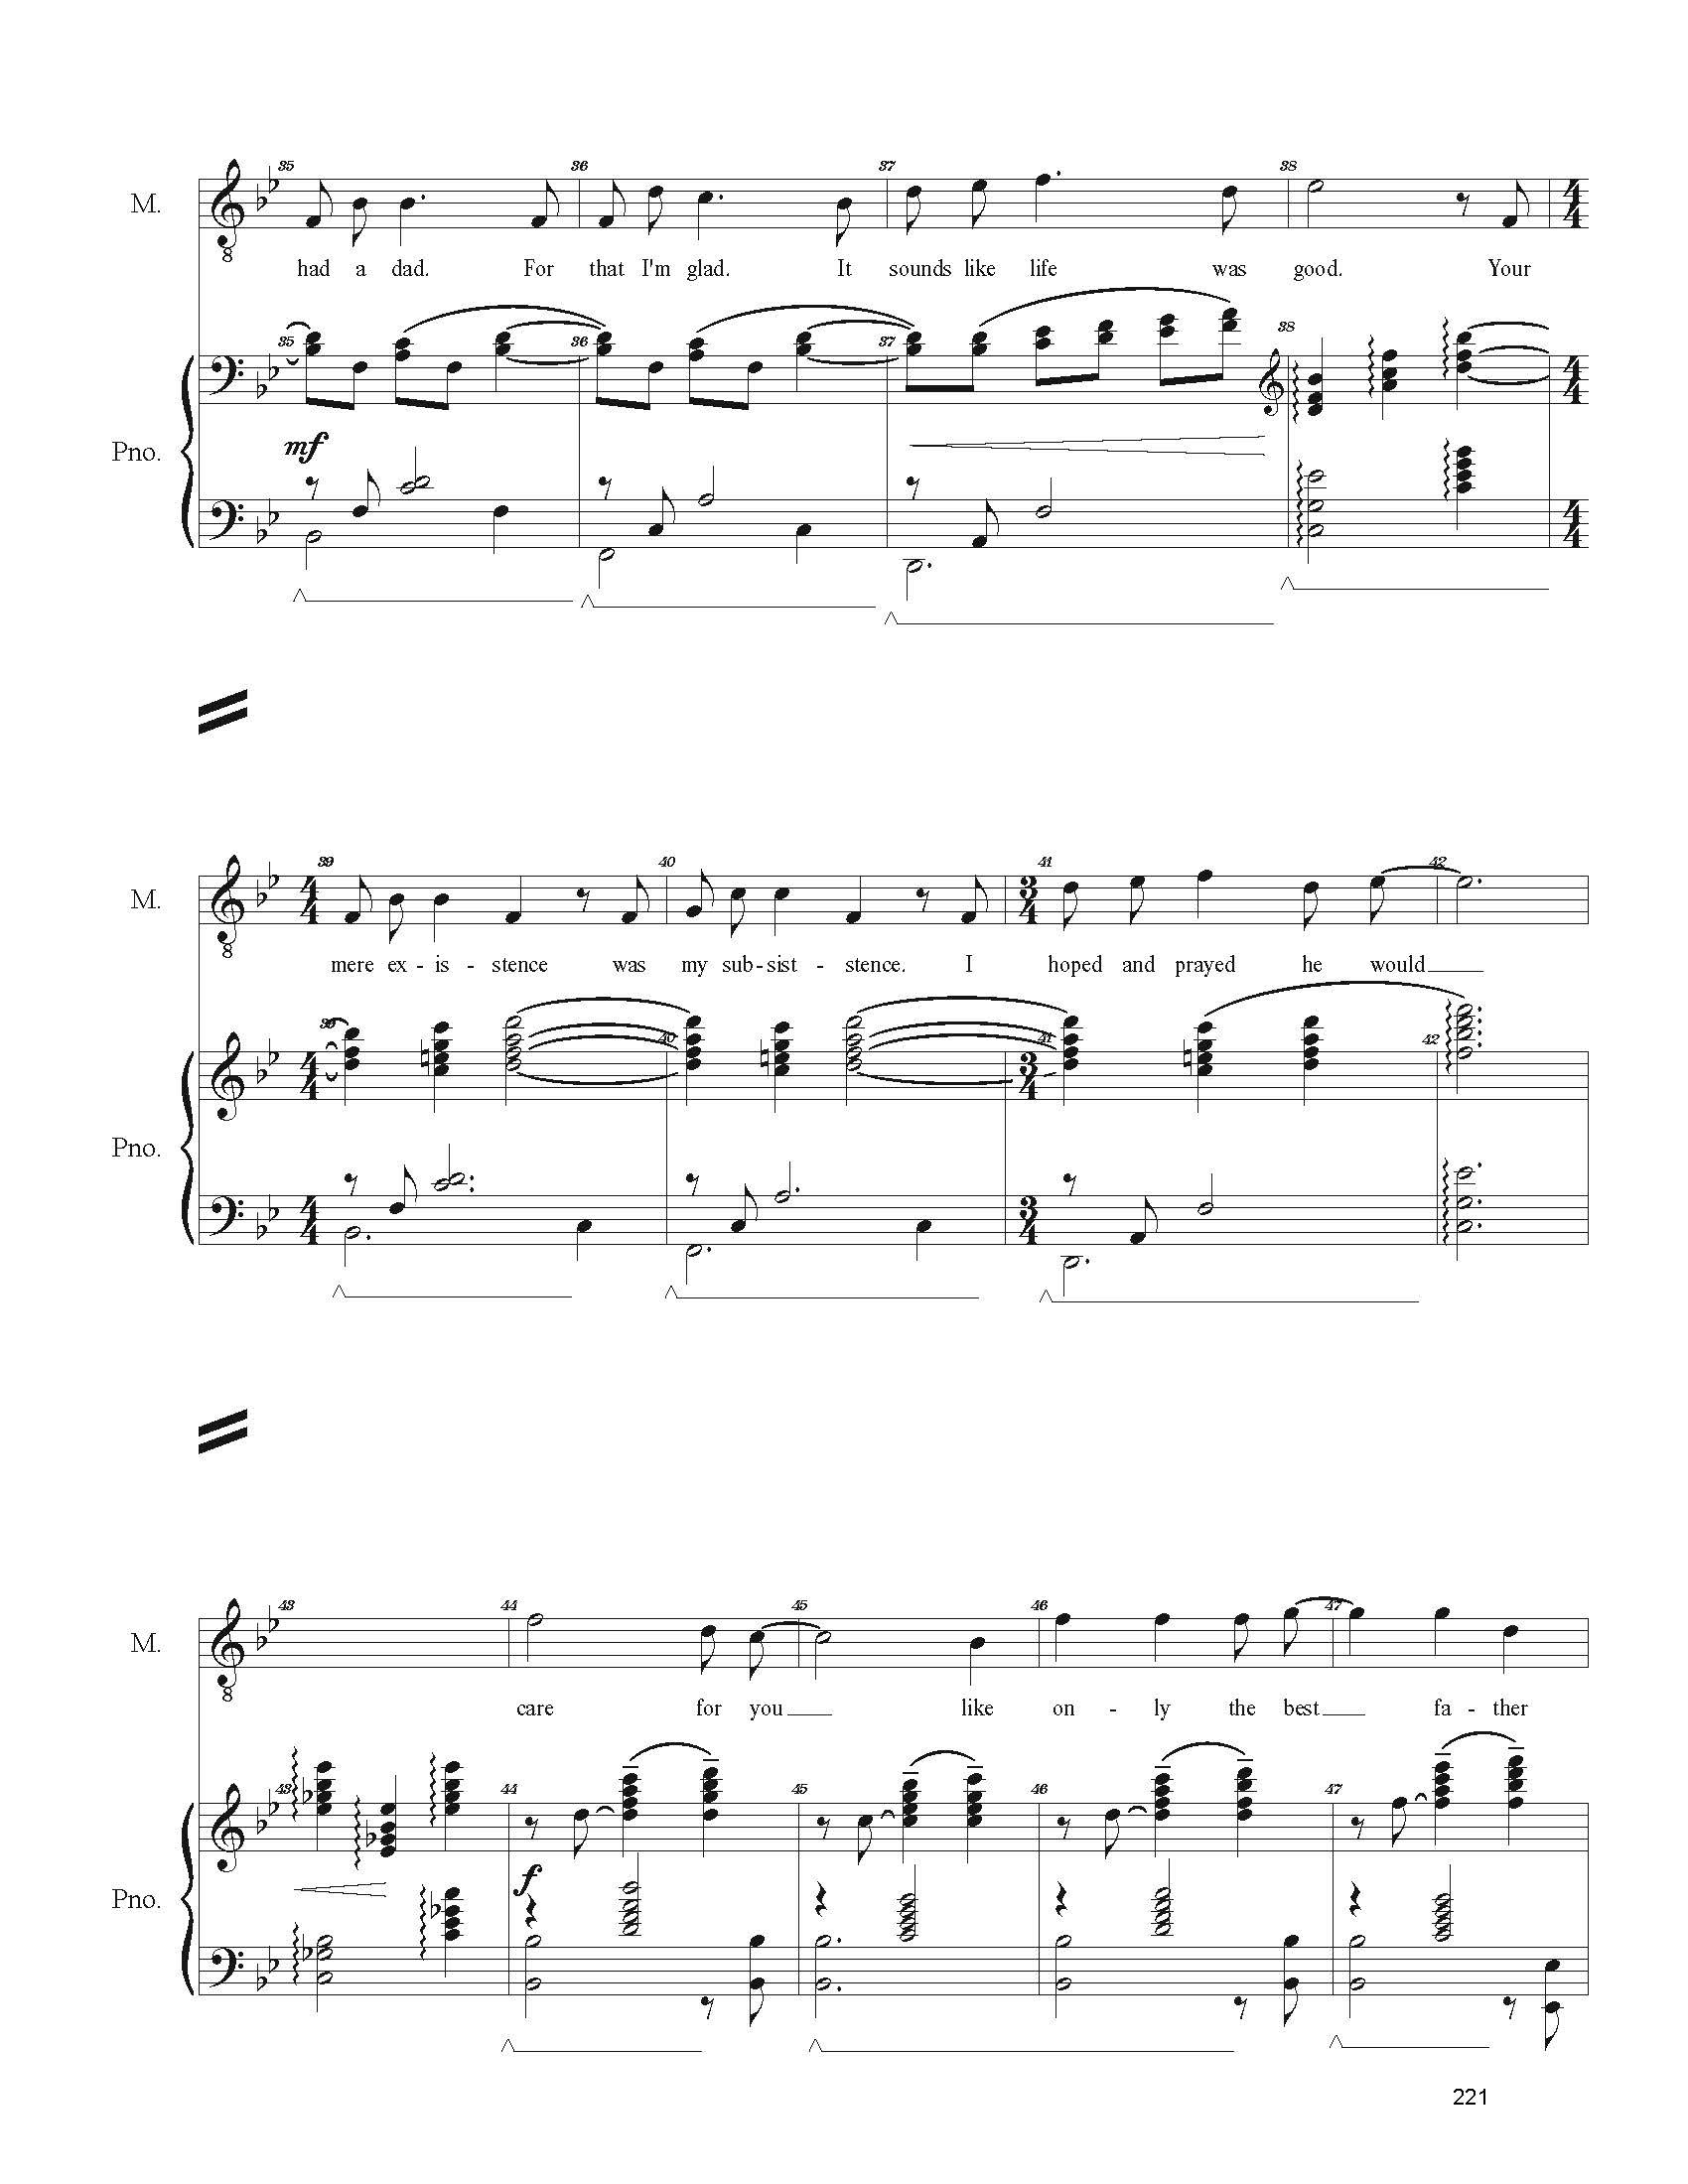 FULL PIANO VOCAL SCORE DRAFT 1 - Score_Page_221.jpg